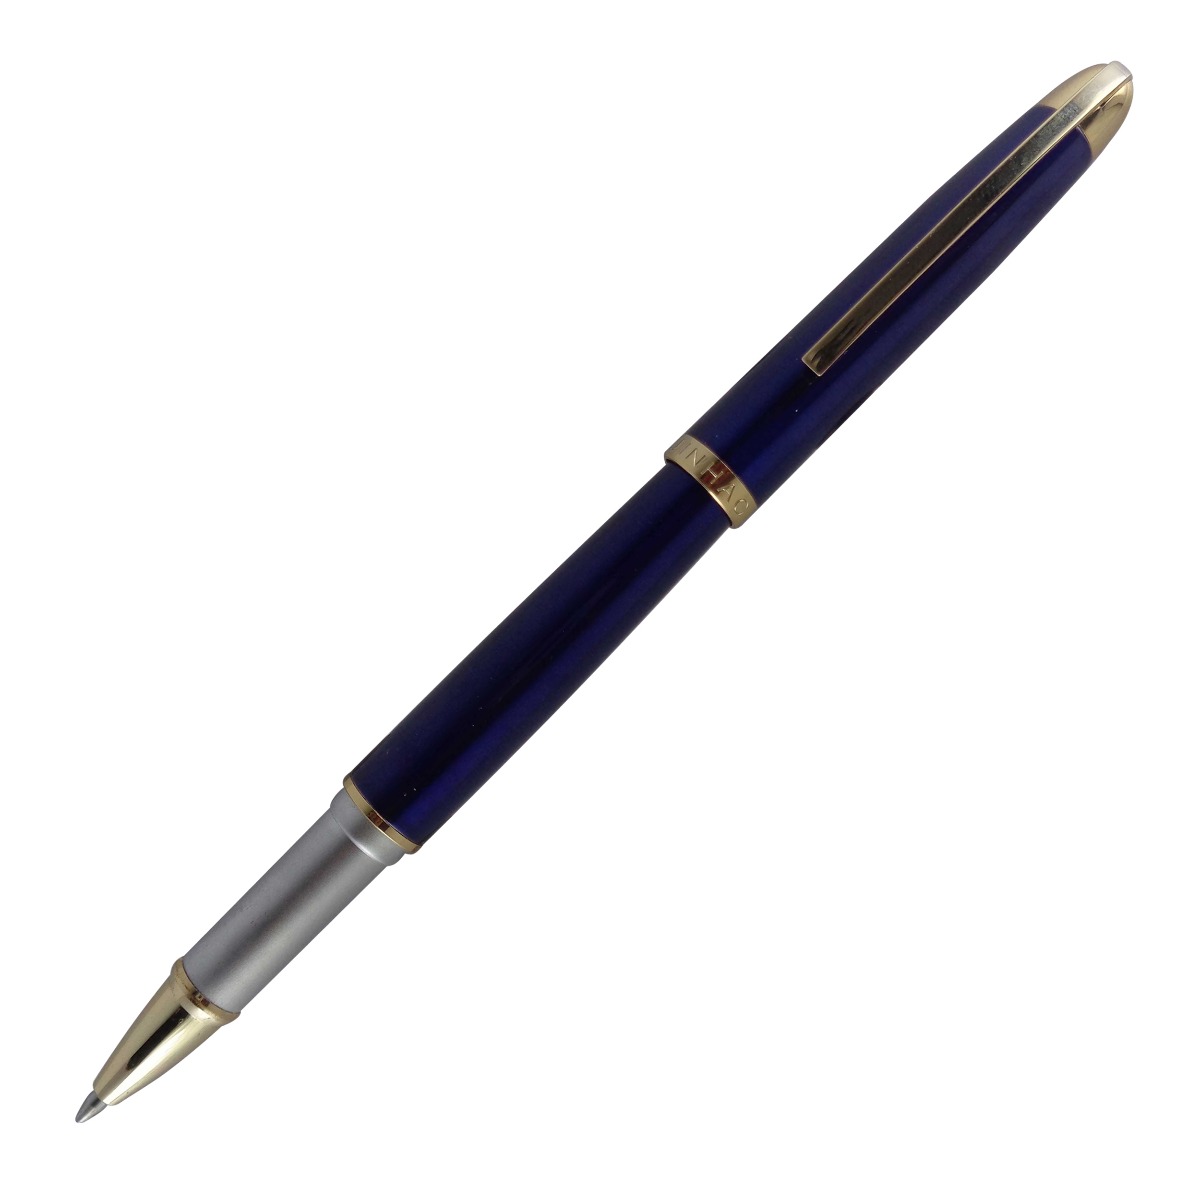 Jinhao 606 Model: 14979  Blue color body with golden color clip cap type medium tip  roller ball